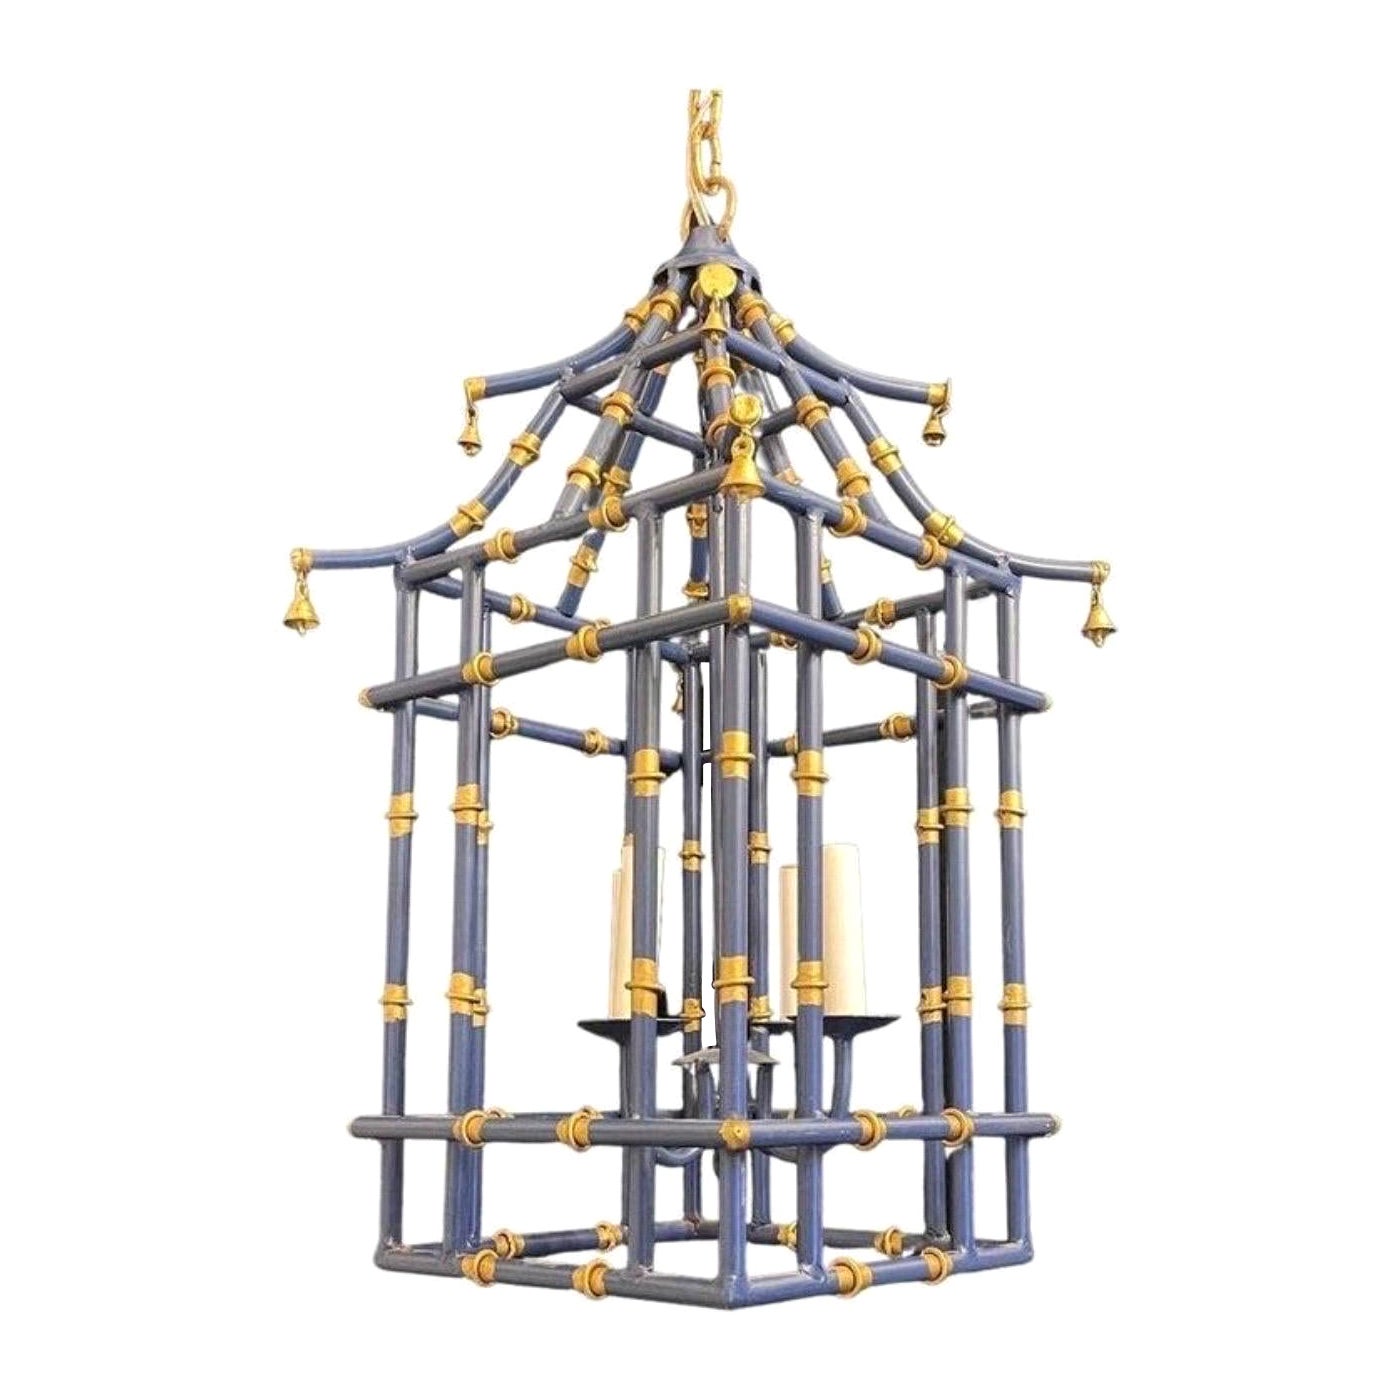 Merveilleuse paire de lanternes chinoiseries en bambou et or doré bleu marine en forme de pagode en vente